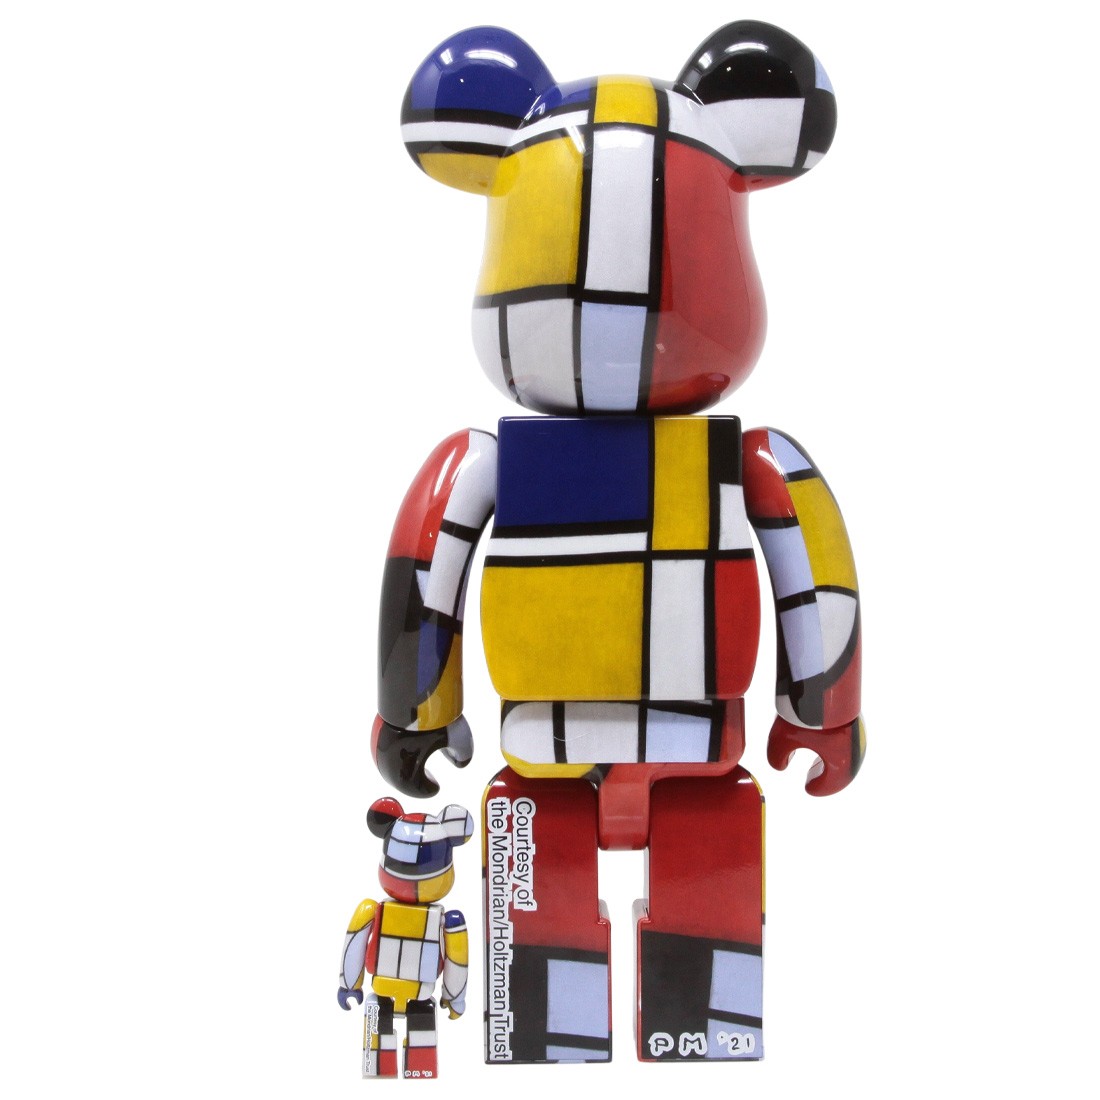 Medicom Piet Mondrian 100% 400% Bearbrick Figure Set (white)